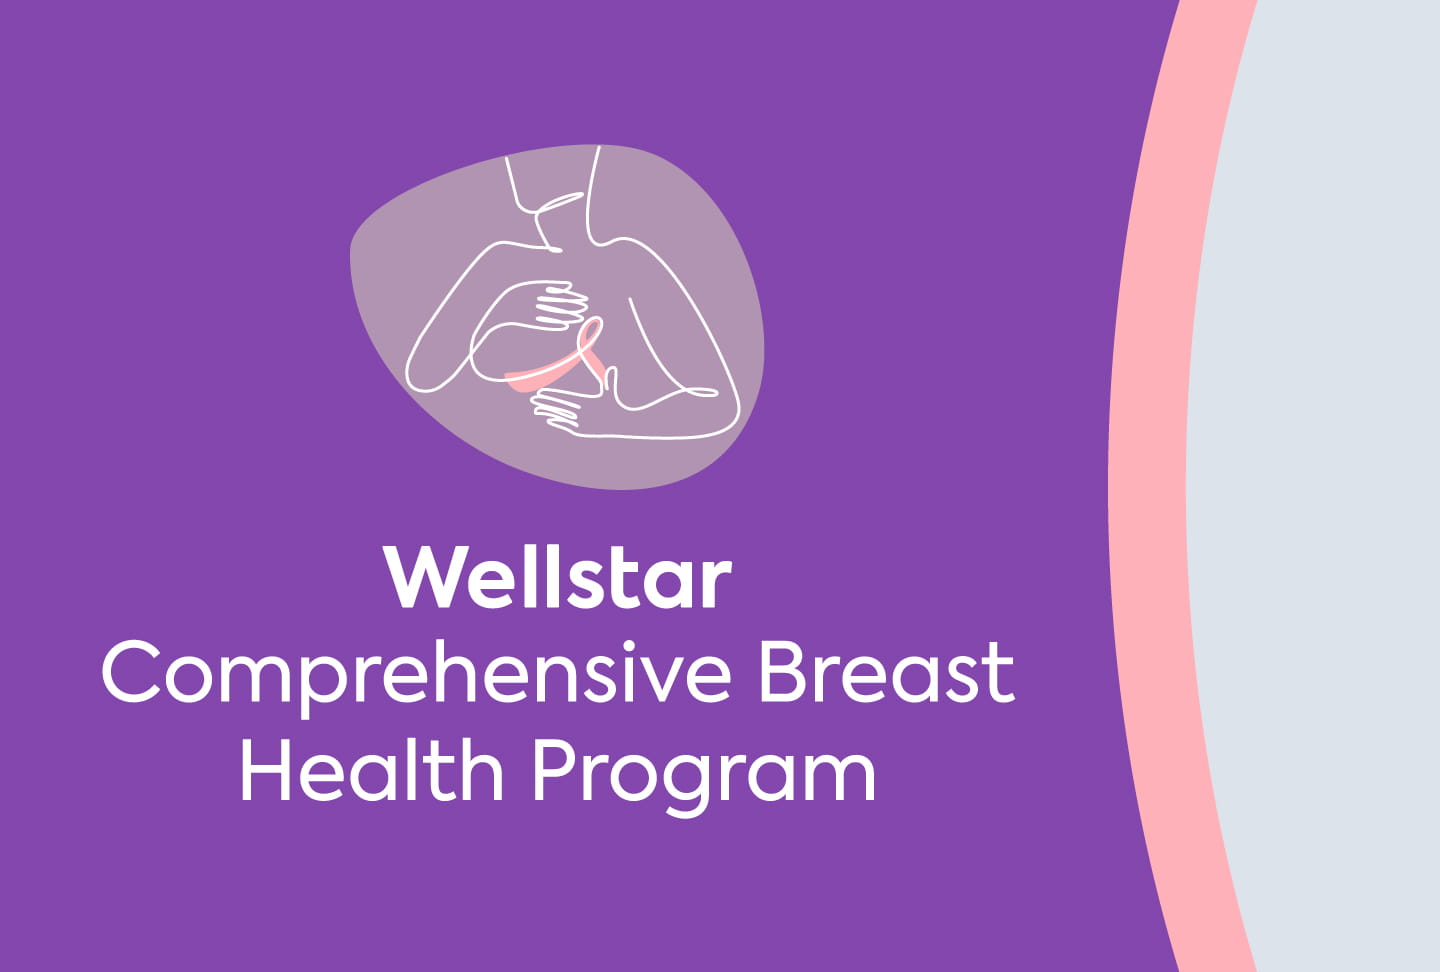 Wellstar Comprehensive Breast Health Program logo (illustration of person and pink ribbon)